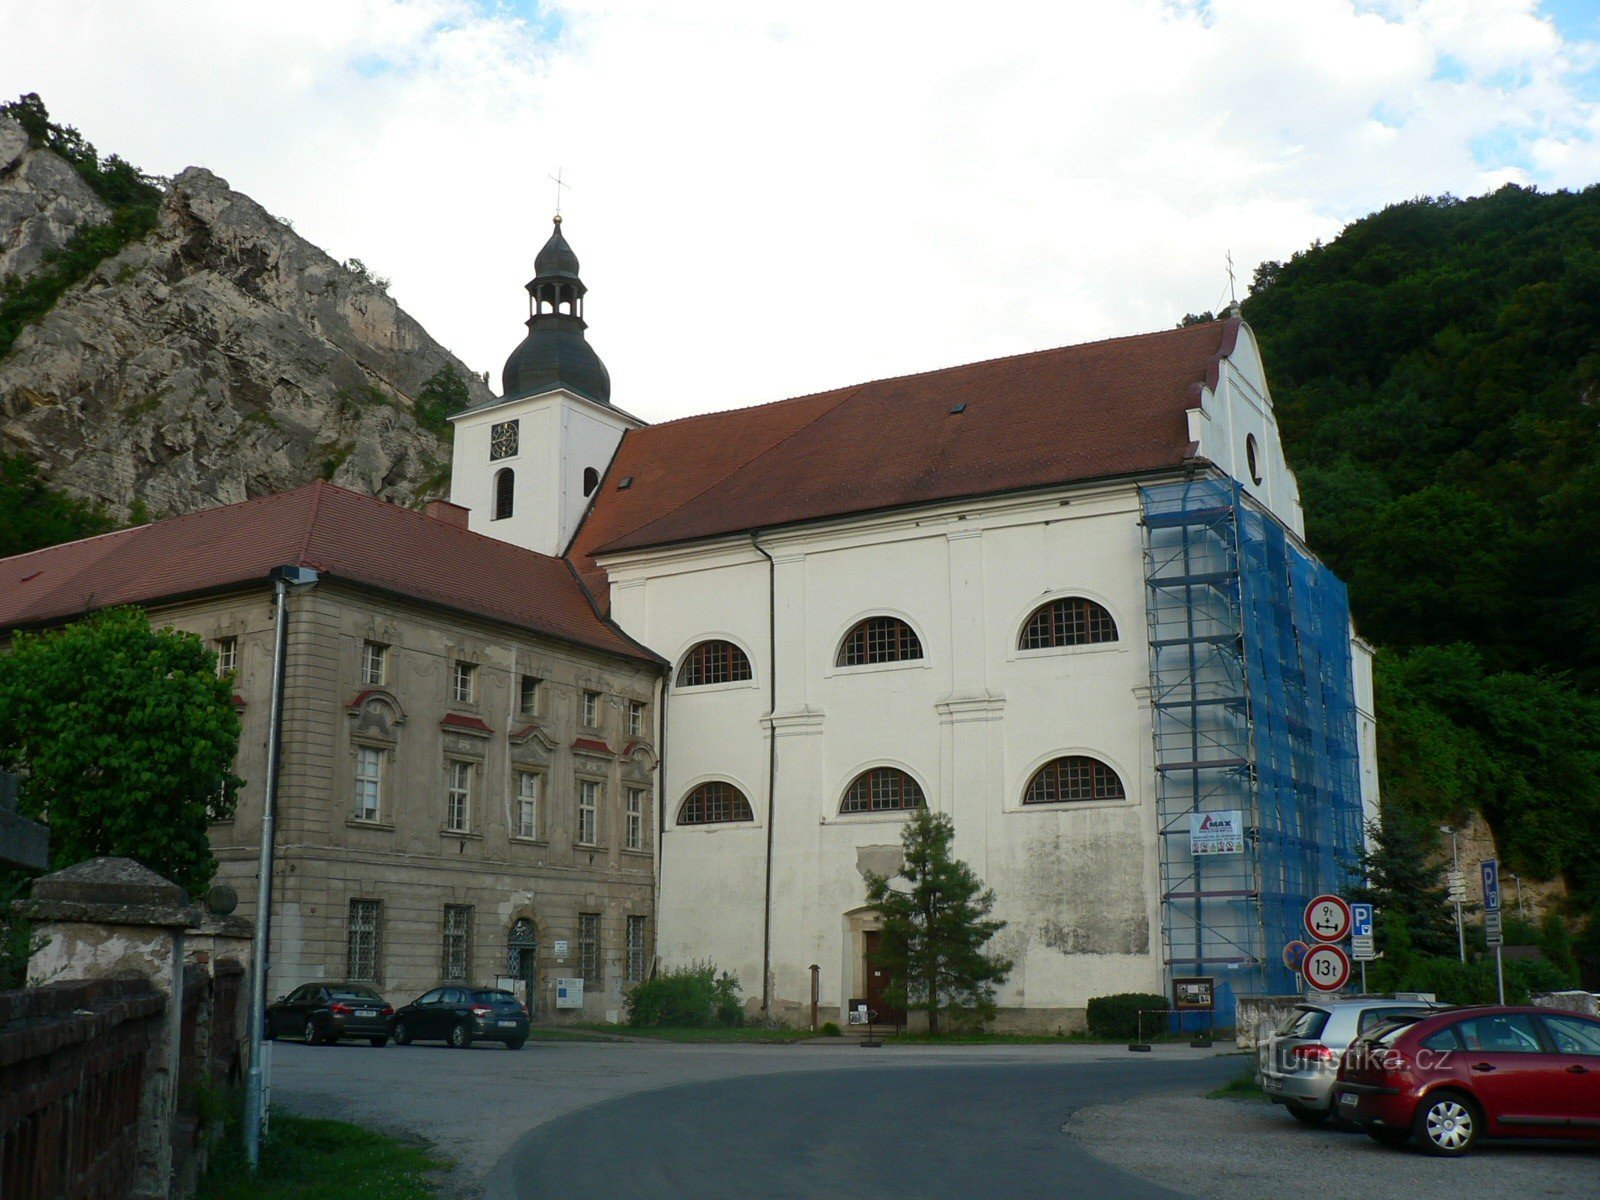 Monastery and church of St. John the Baptist